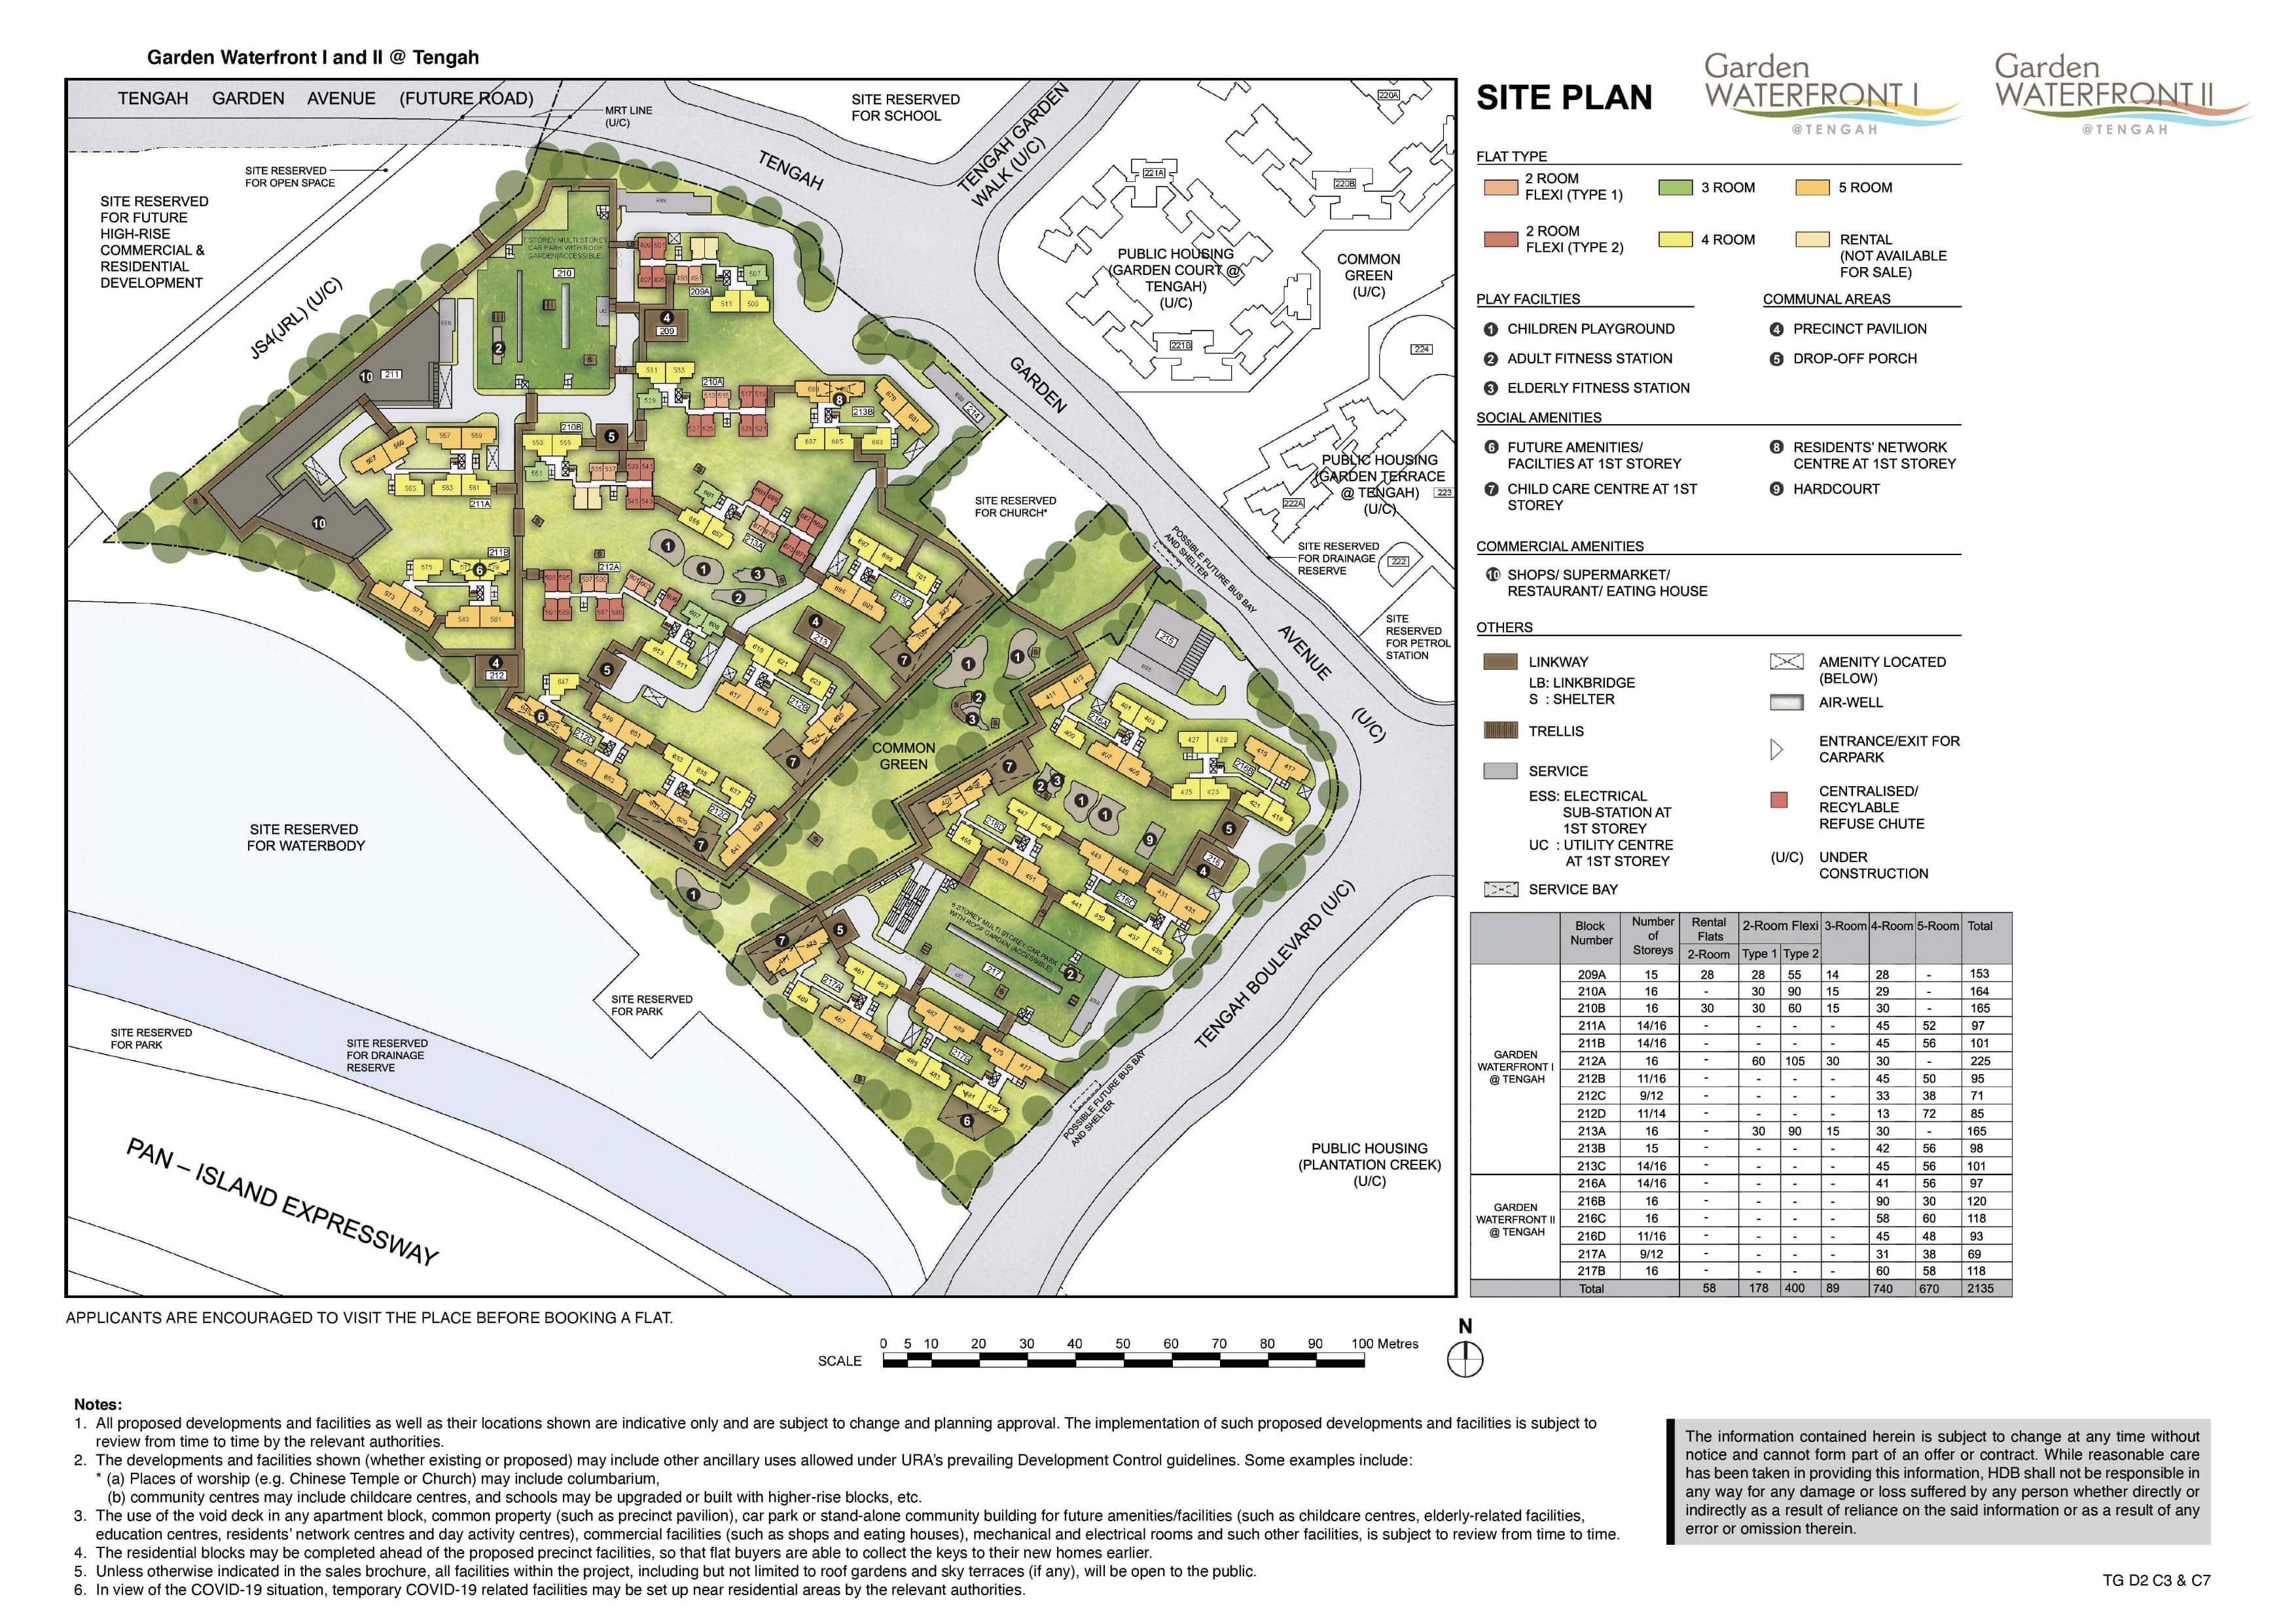 Garden Waterfront I II Site Plan